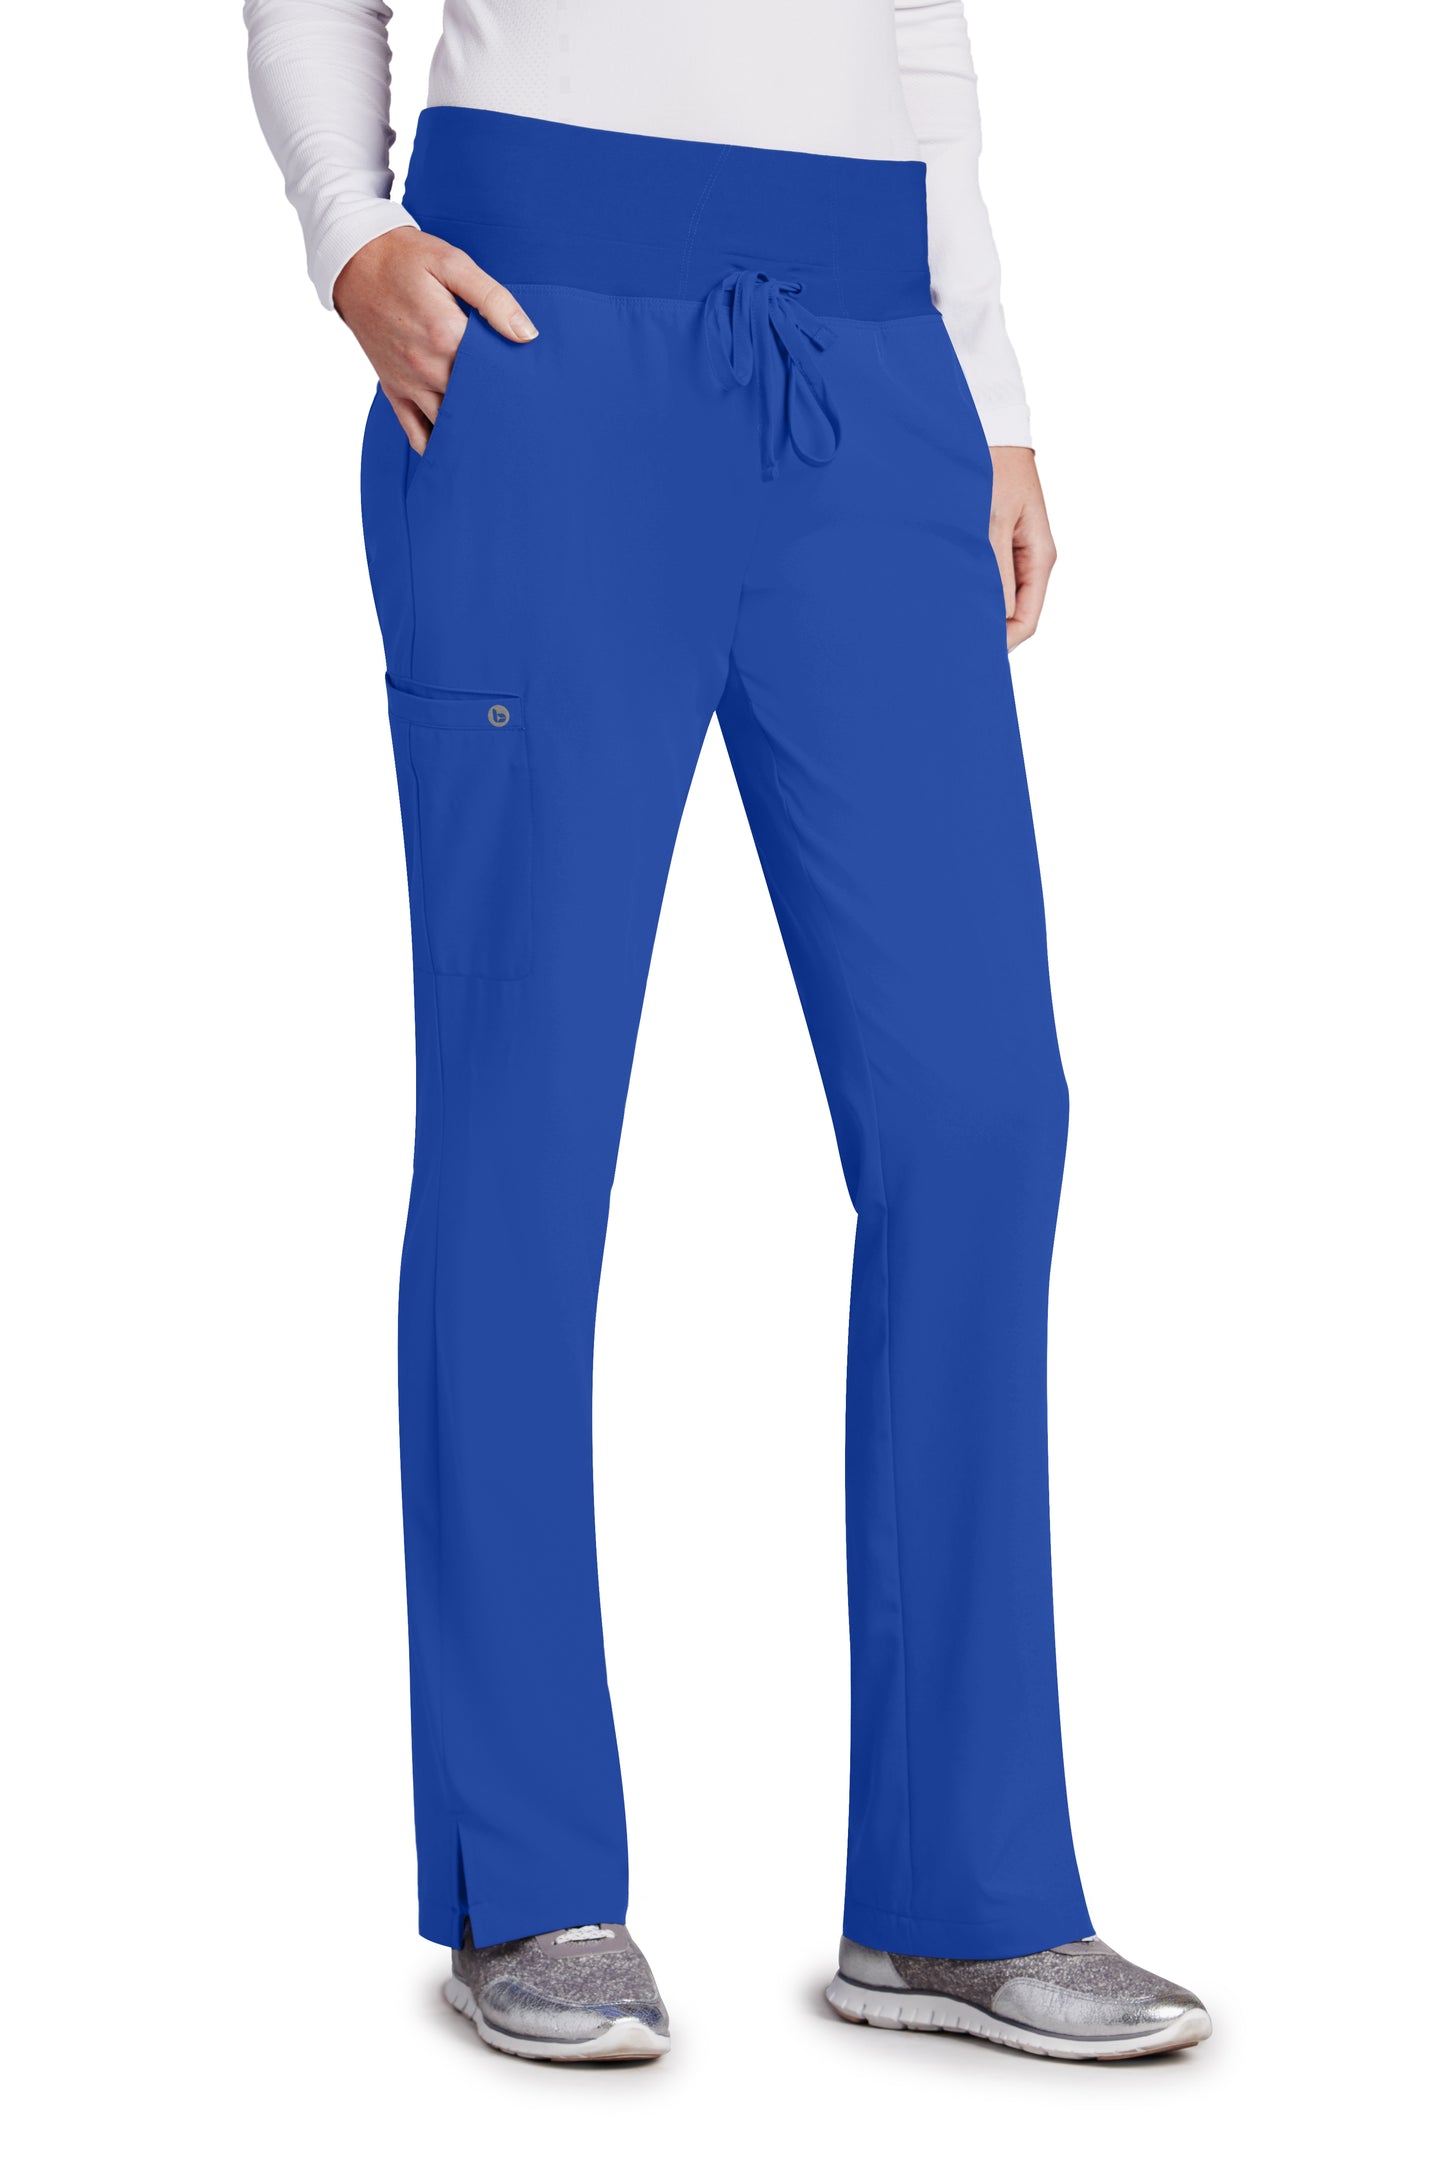 Barco One 5206 Women's Stride Yoga Straight Leg Cargo Pant Royal Blue